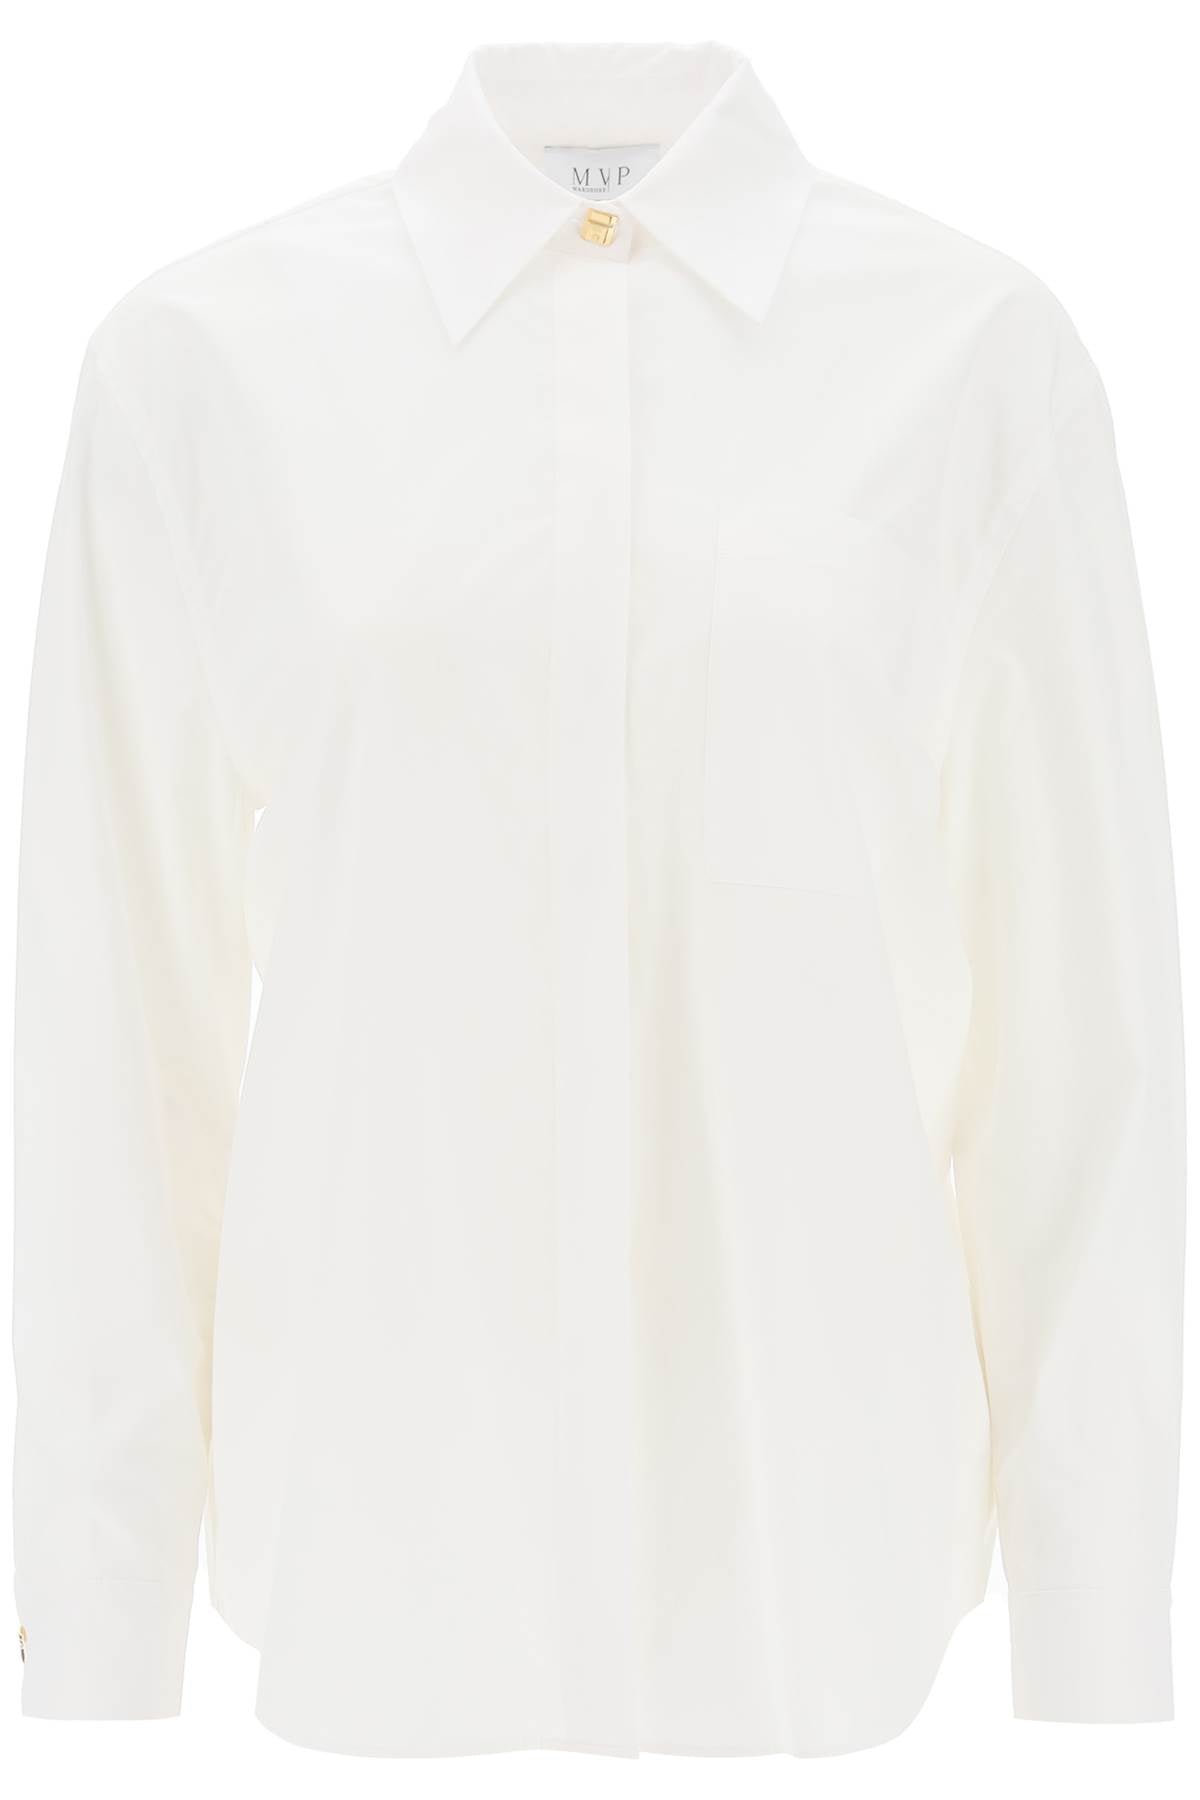 Mvp wardrobe 'matteotti' cotton shirt-0